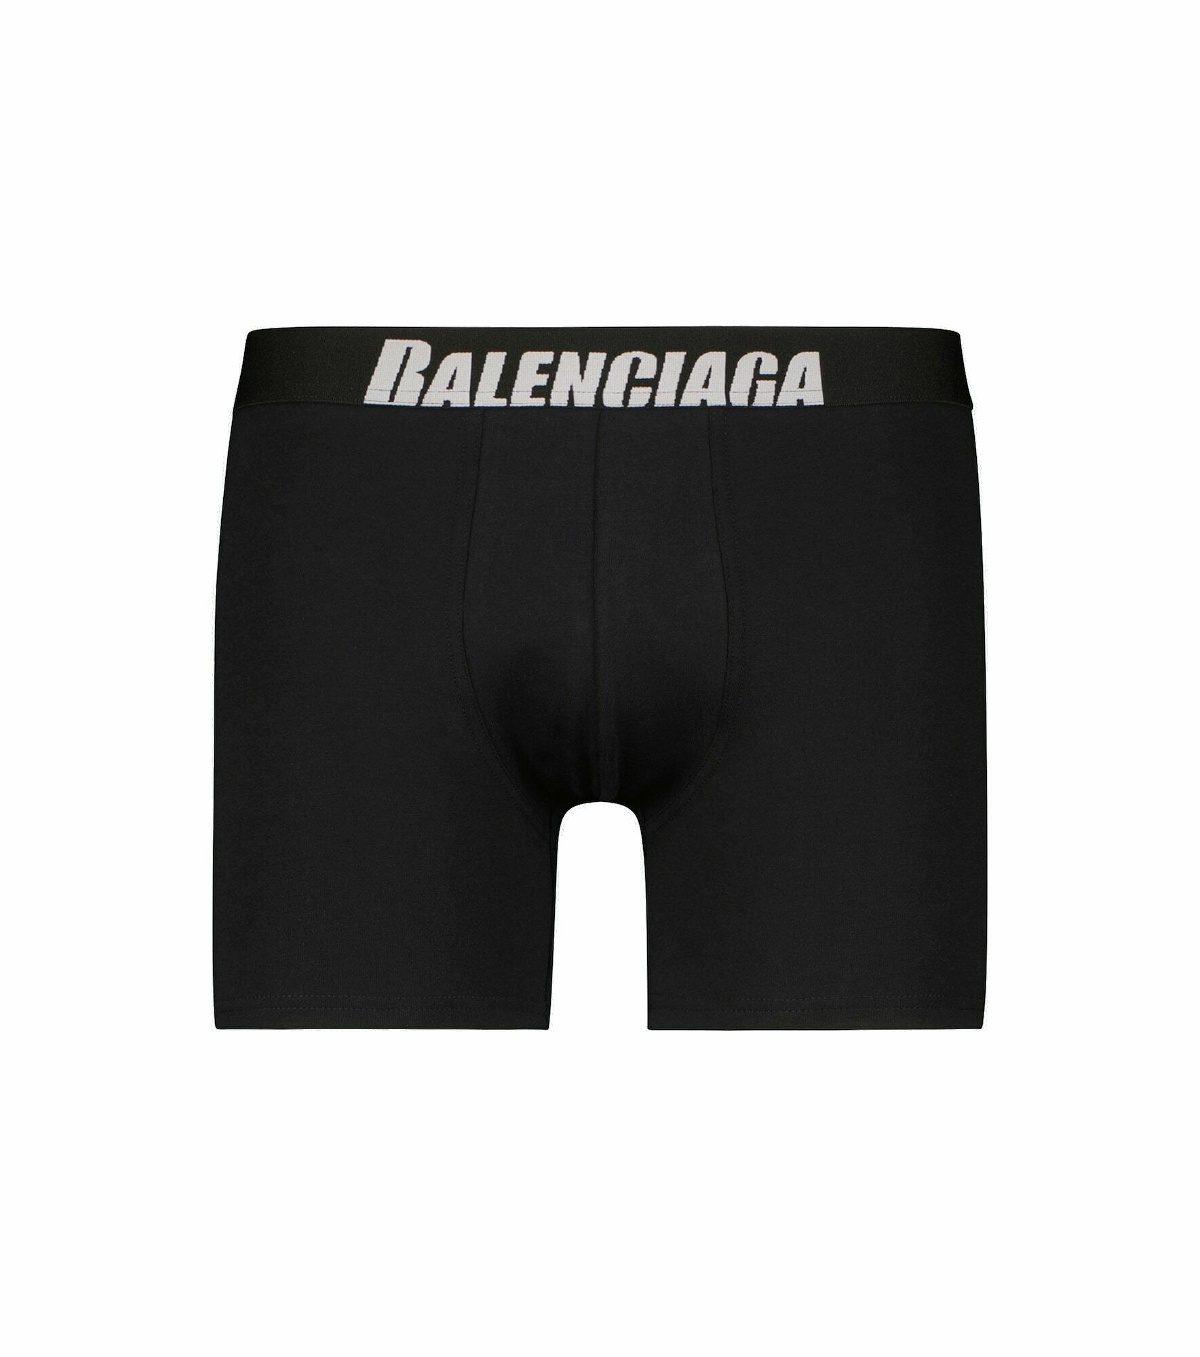 Buy Balenciaga Boxer Brief 'Black' - 698423 4B7B3 1000